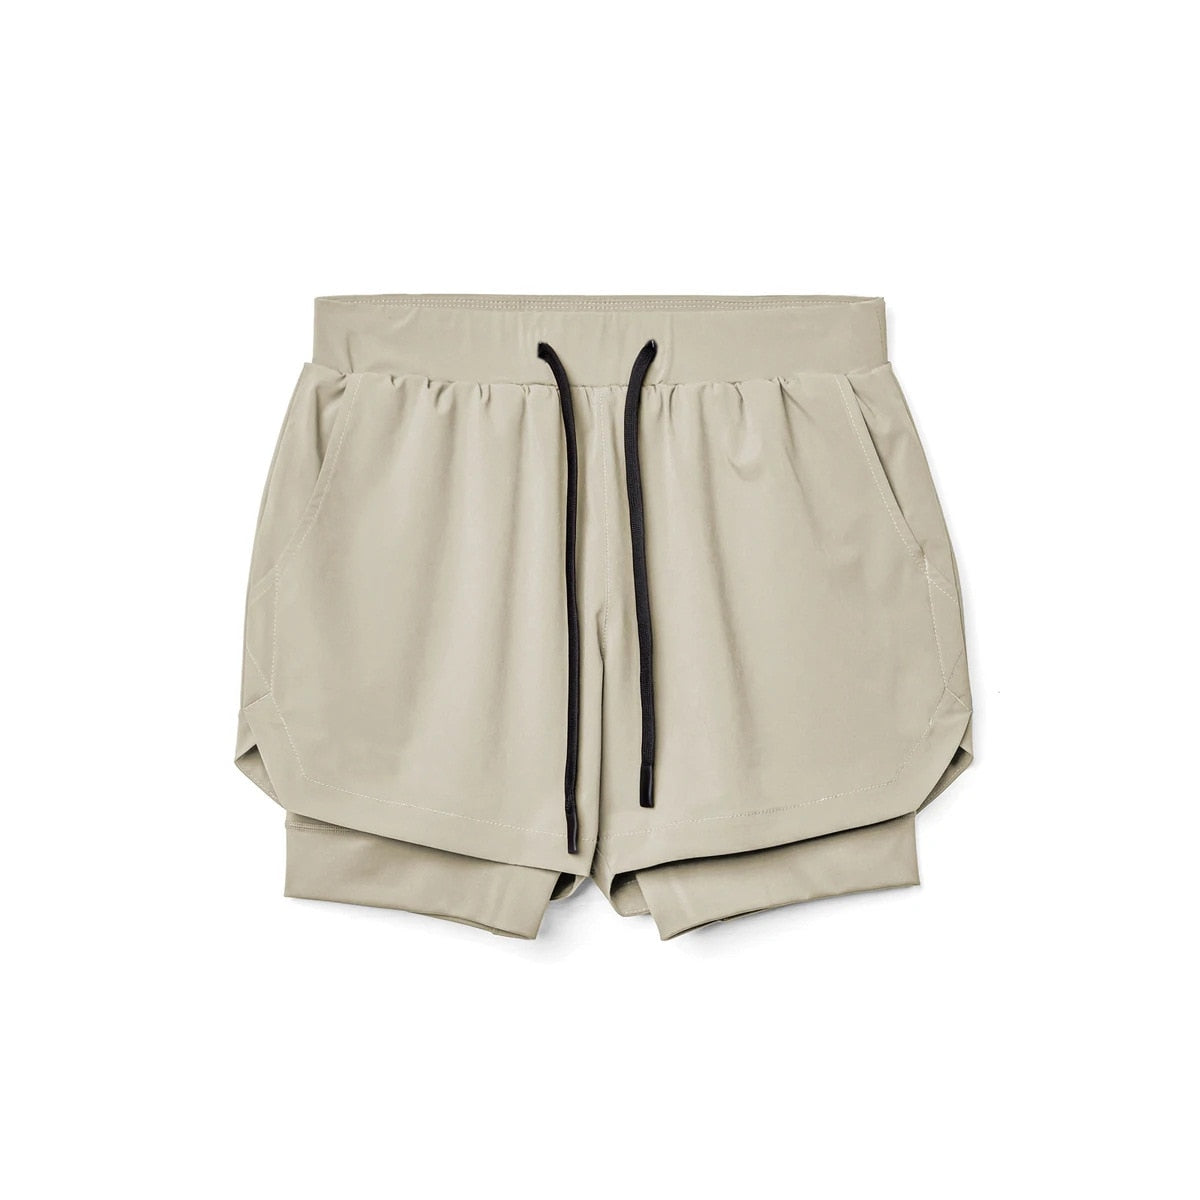 Buy khaki Breathable Double layer sport shorts for Men